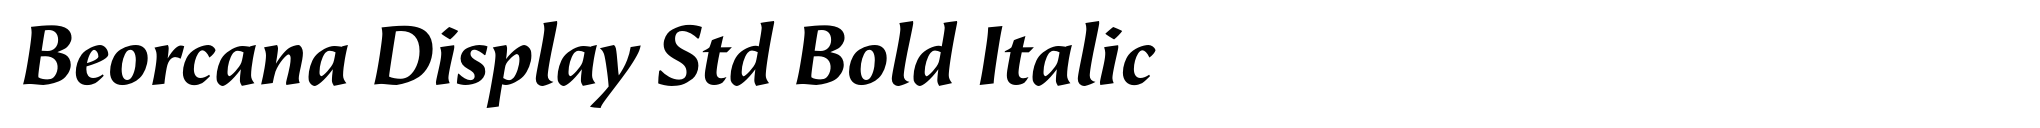 Beorcana Display Std Bold Italic image